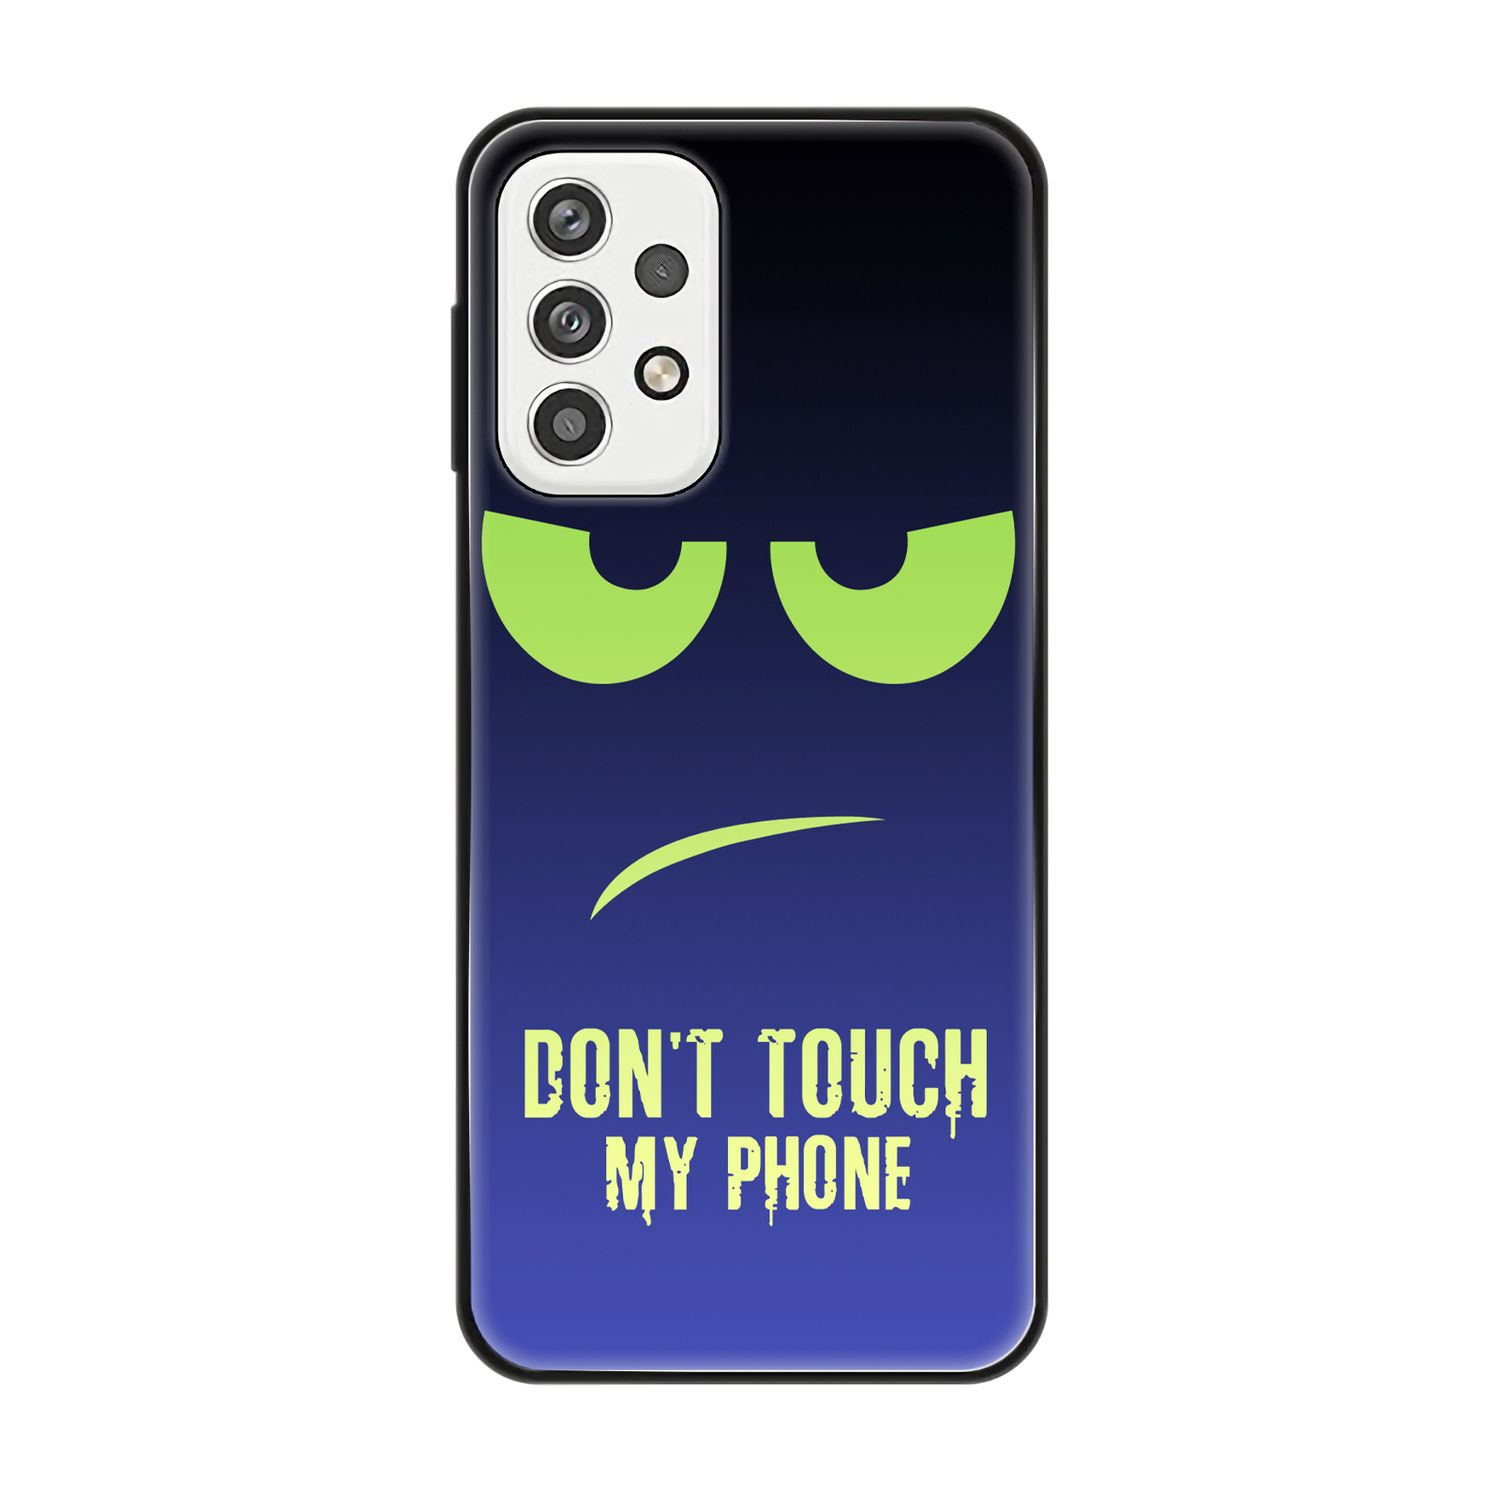 Dont Case, Galaxy Samsung, My A23, Blau Grün Backcover, DESIGN KÖNIG Touch Phone